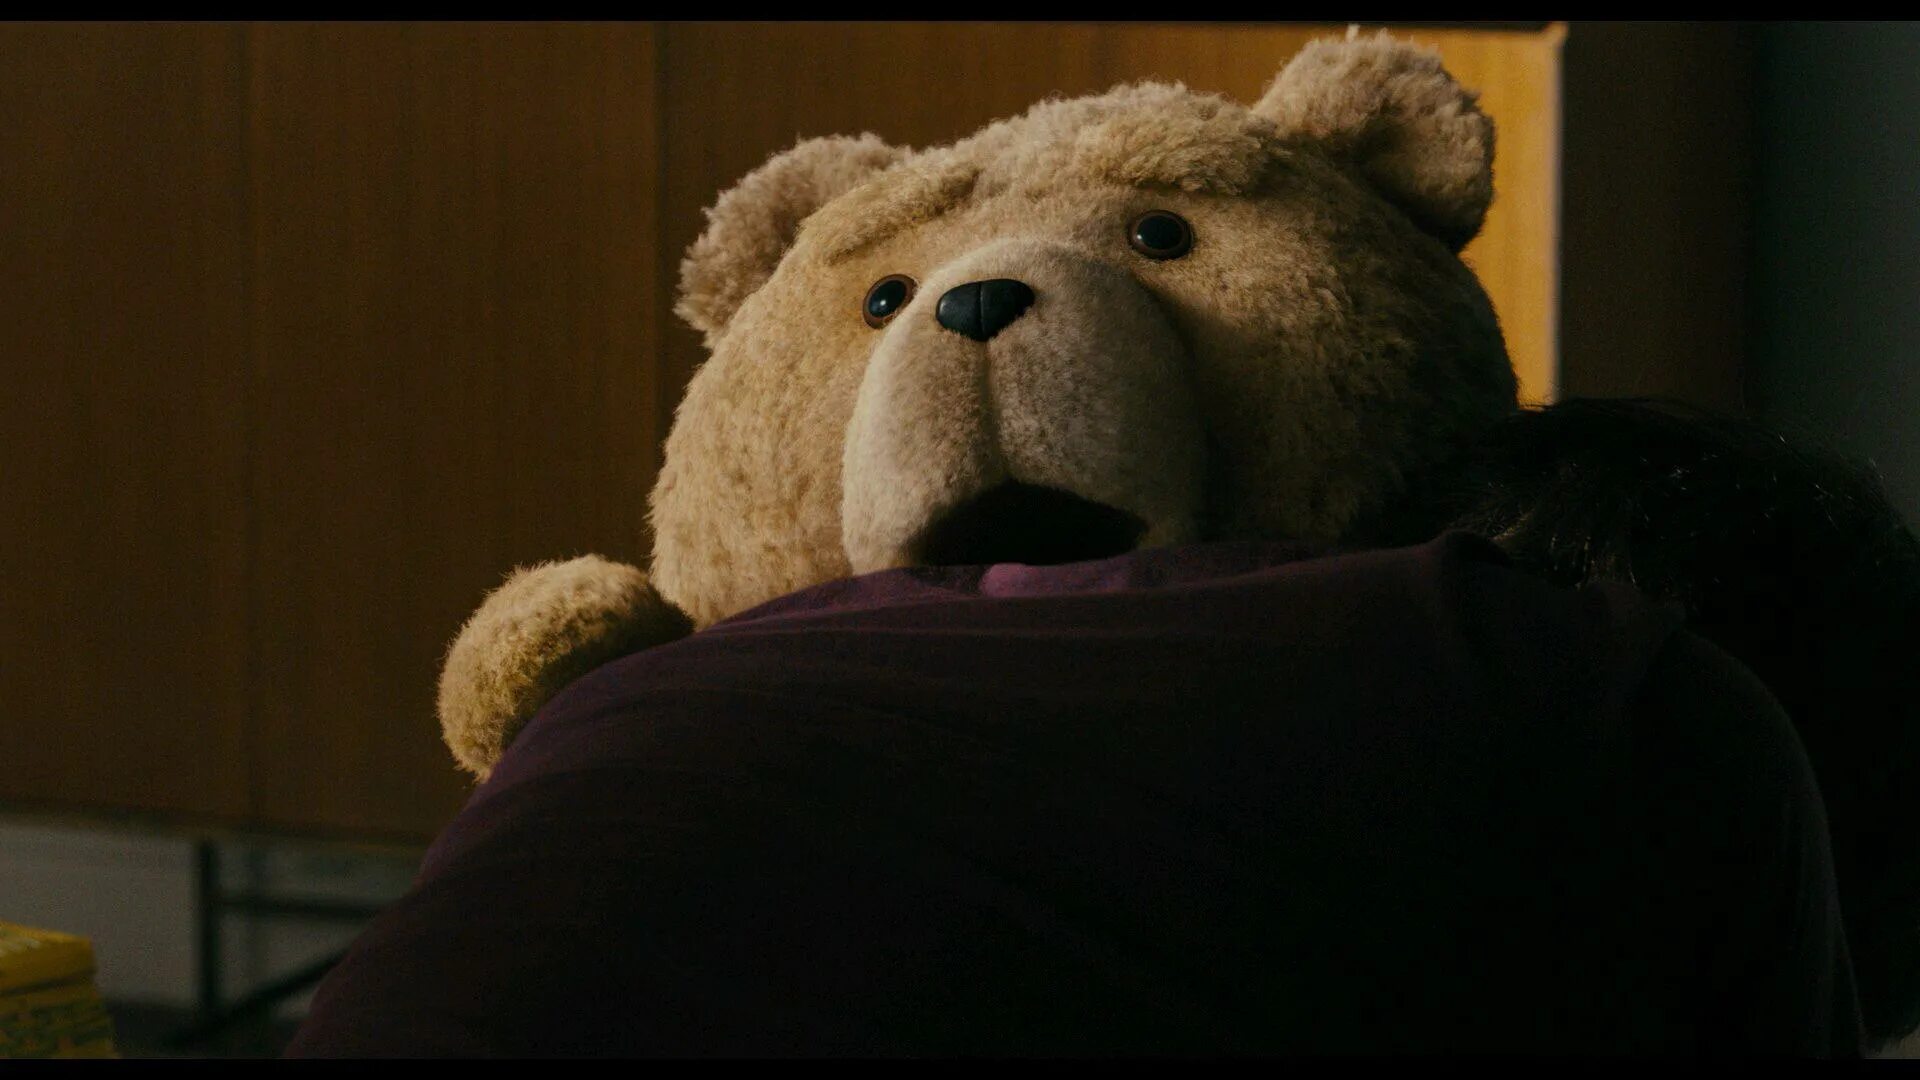 Тед 2012. Третий лишний / Ted (2012). Медведь Тед. Мишка Тед третий лишний. Третий лишний 8